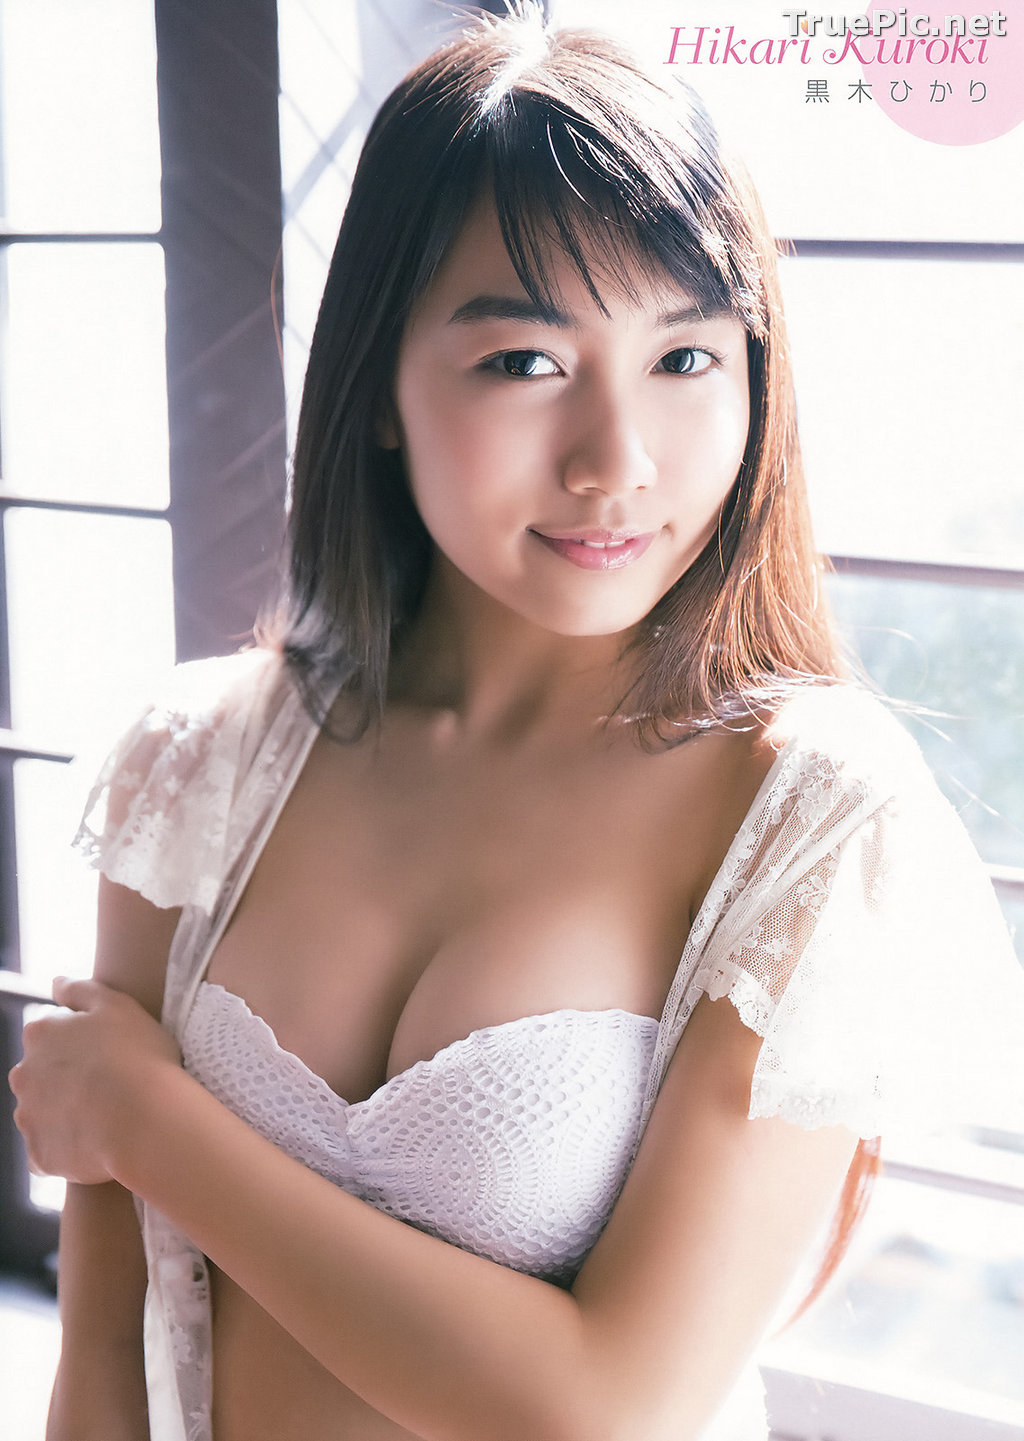 Image Japanese Actress and Model – Hikari Kuroki (黒木ひかり) – Sexy Picture Collection 2021 - TruePic.net - Picture-223